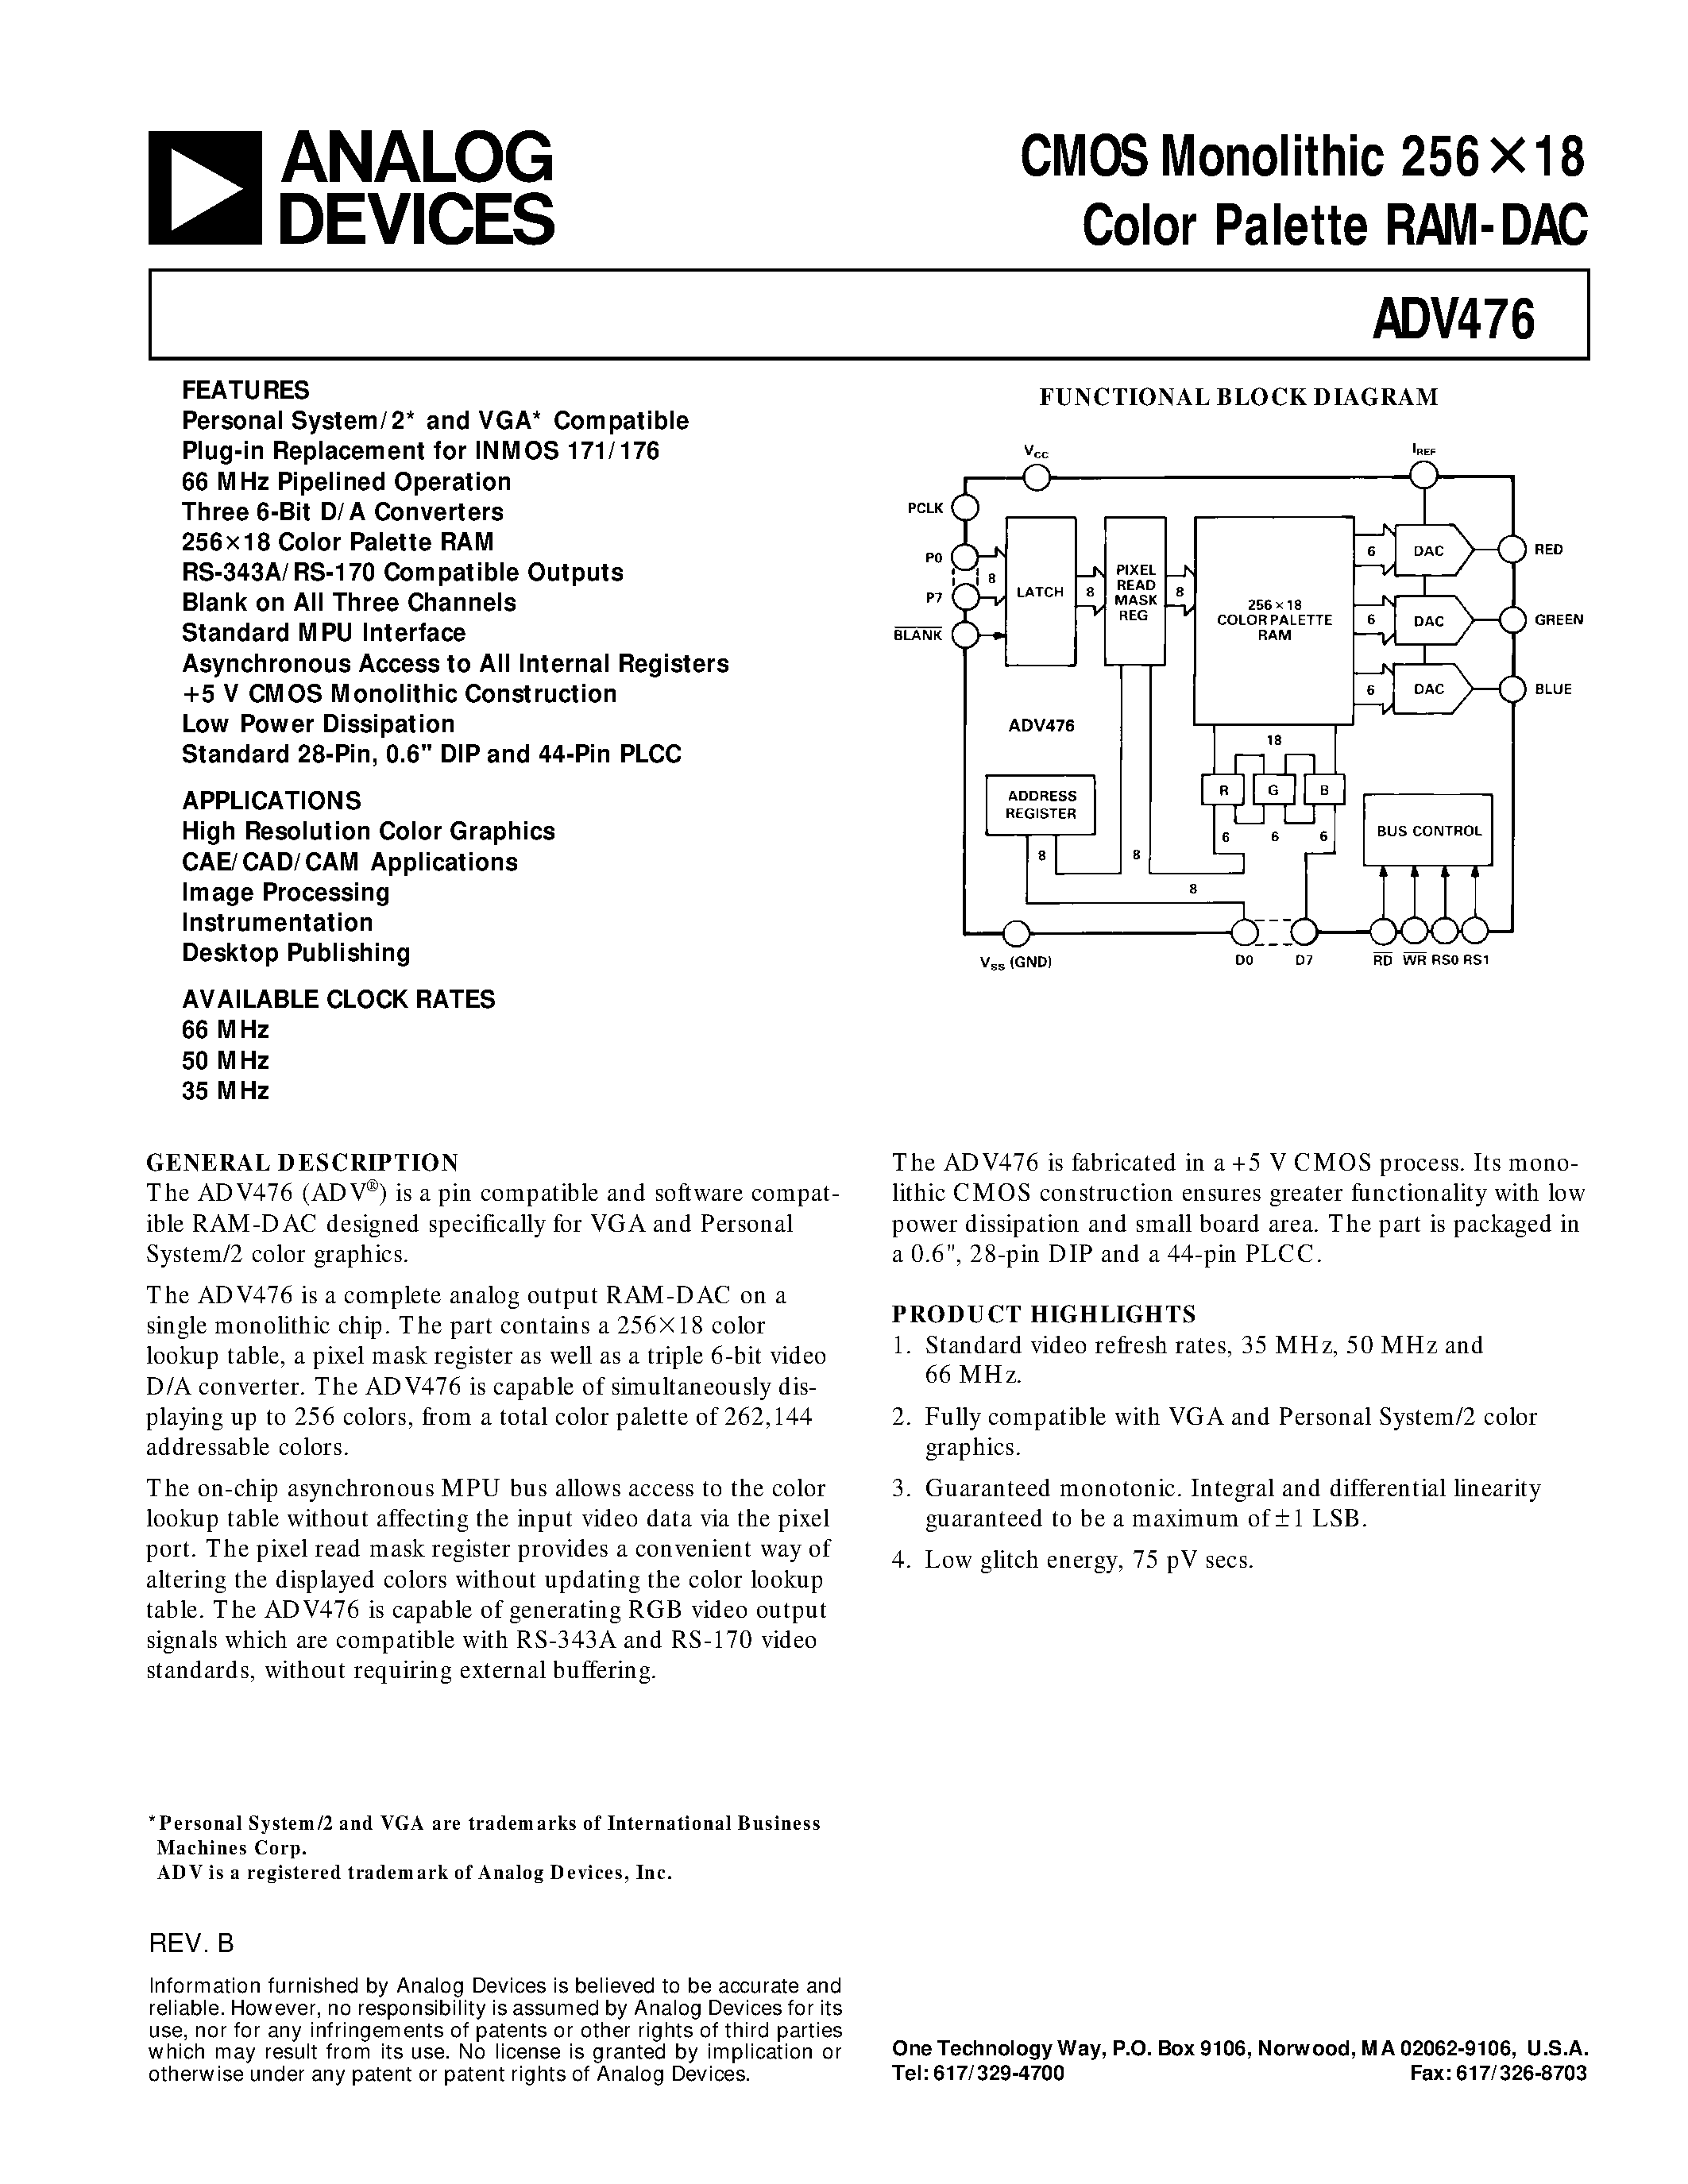 Datasheet ADV476KP66 - CMOS Monolithic 256x18 Color Palette RAM-DAC page 1